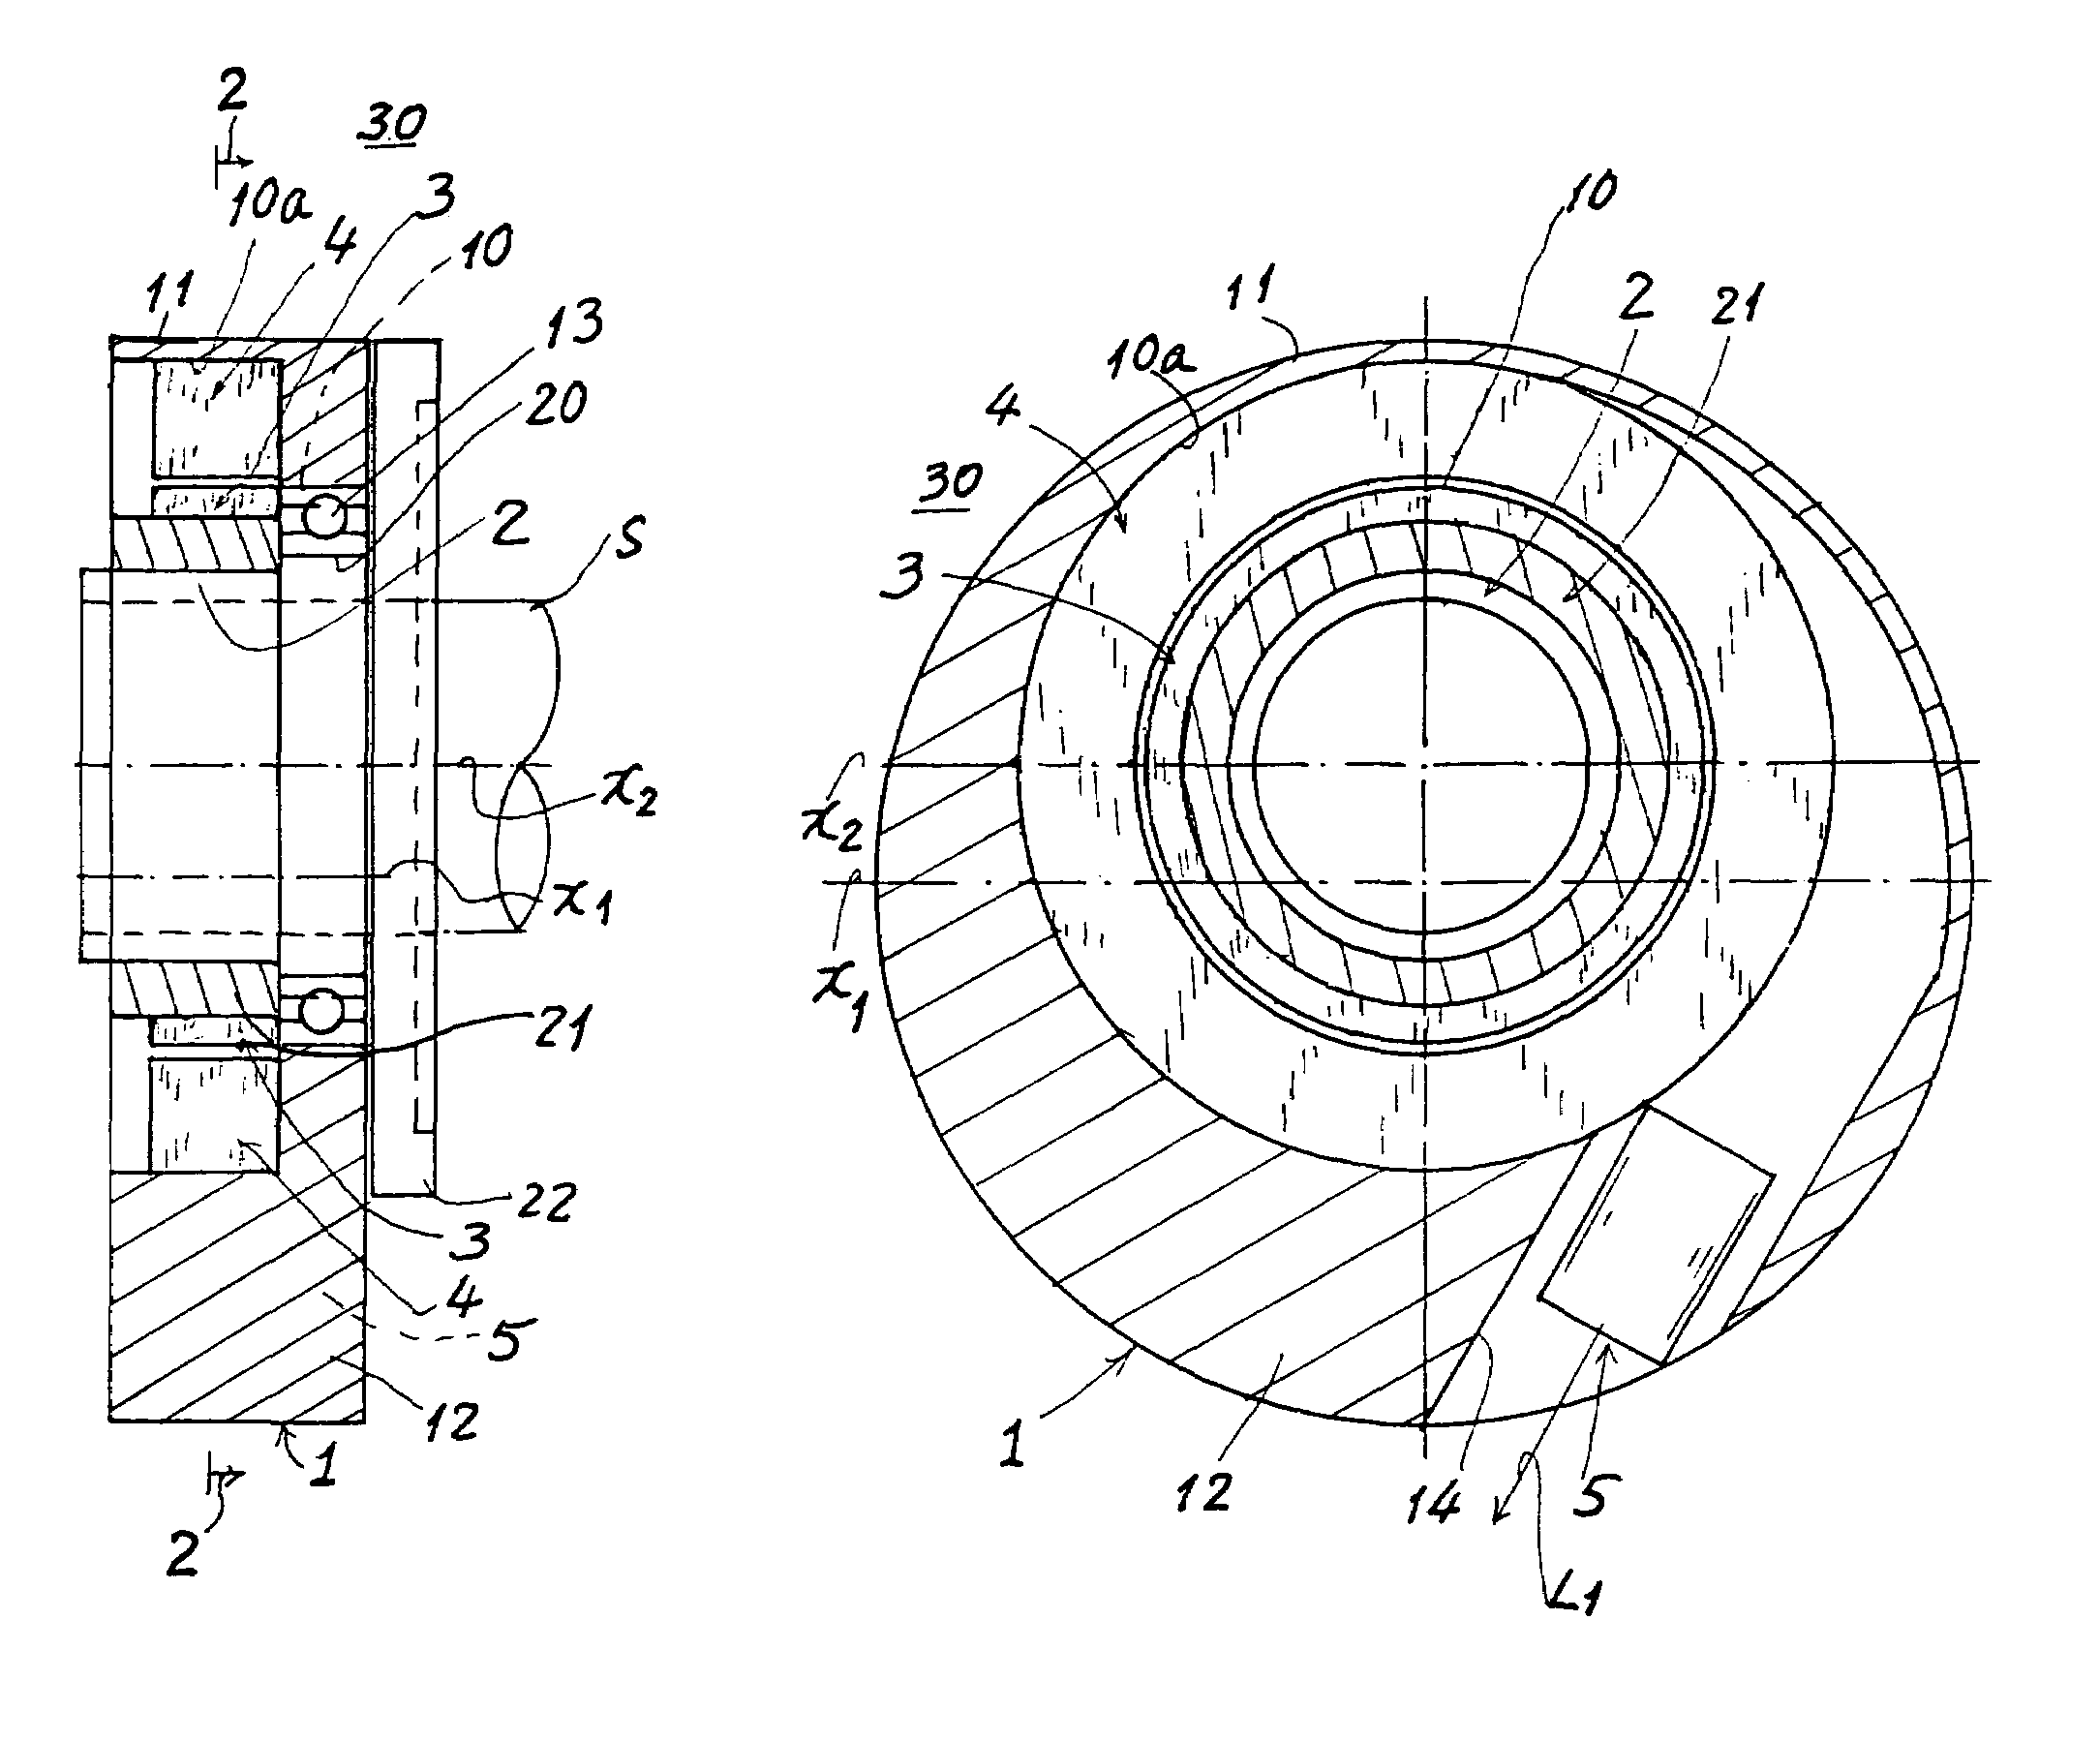 Self-powered rotary optical aligning apparatus